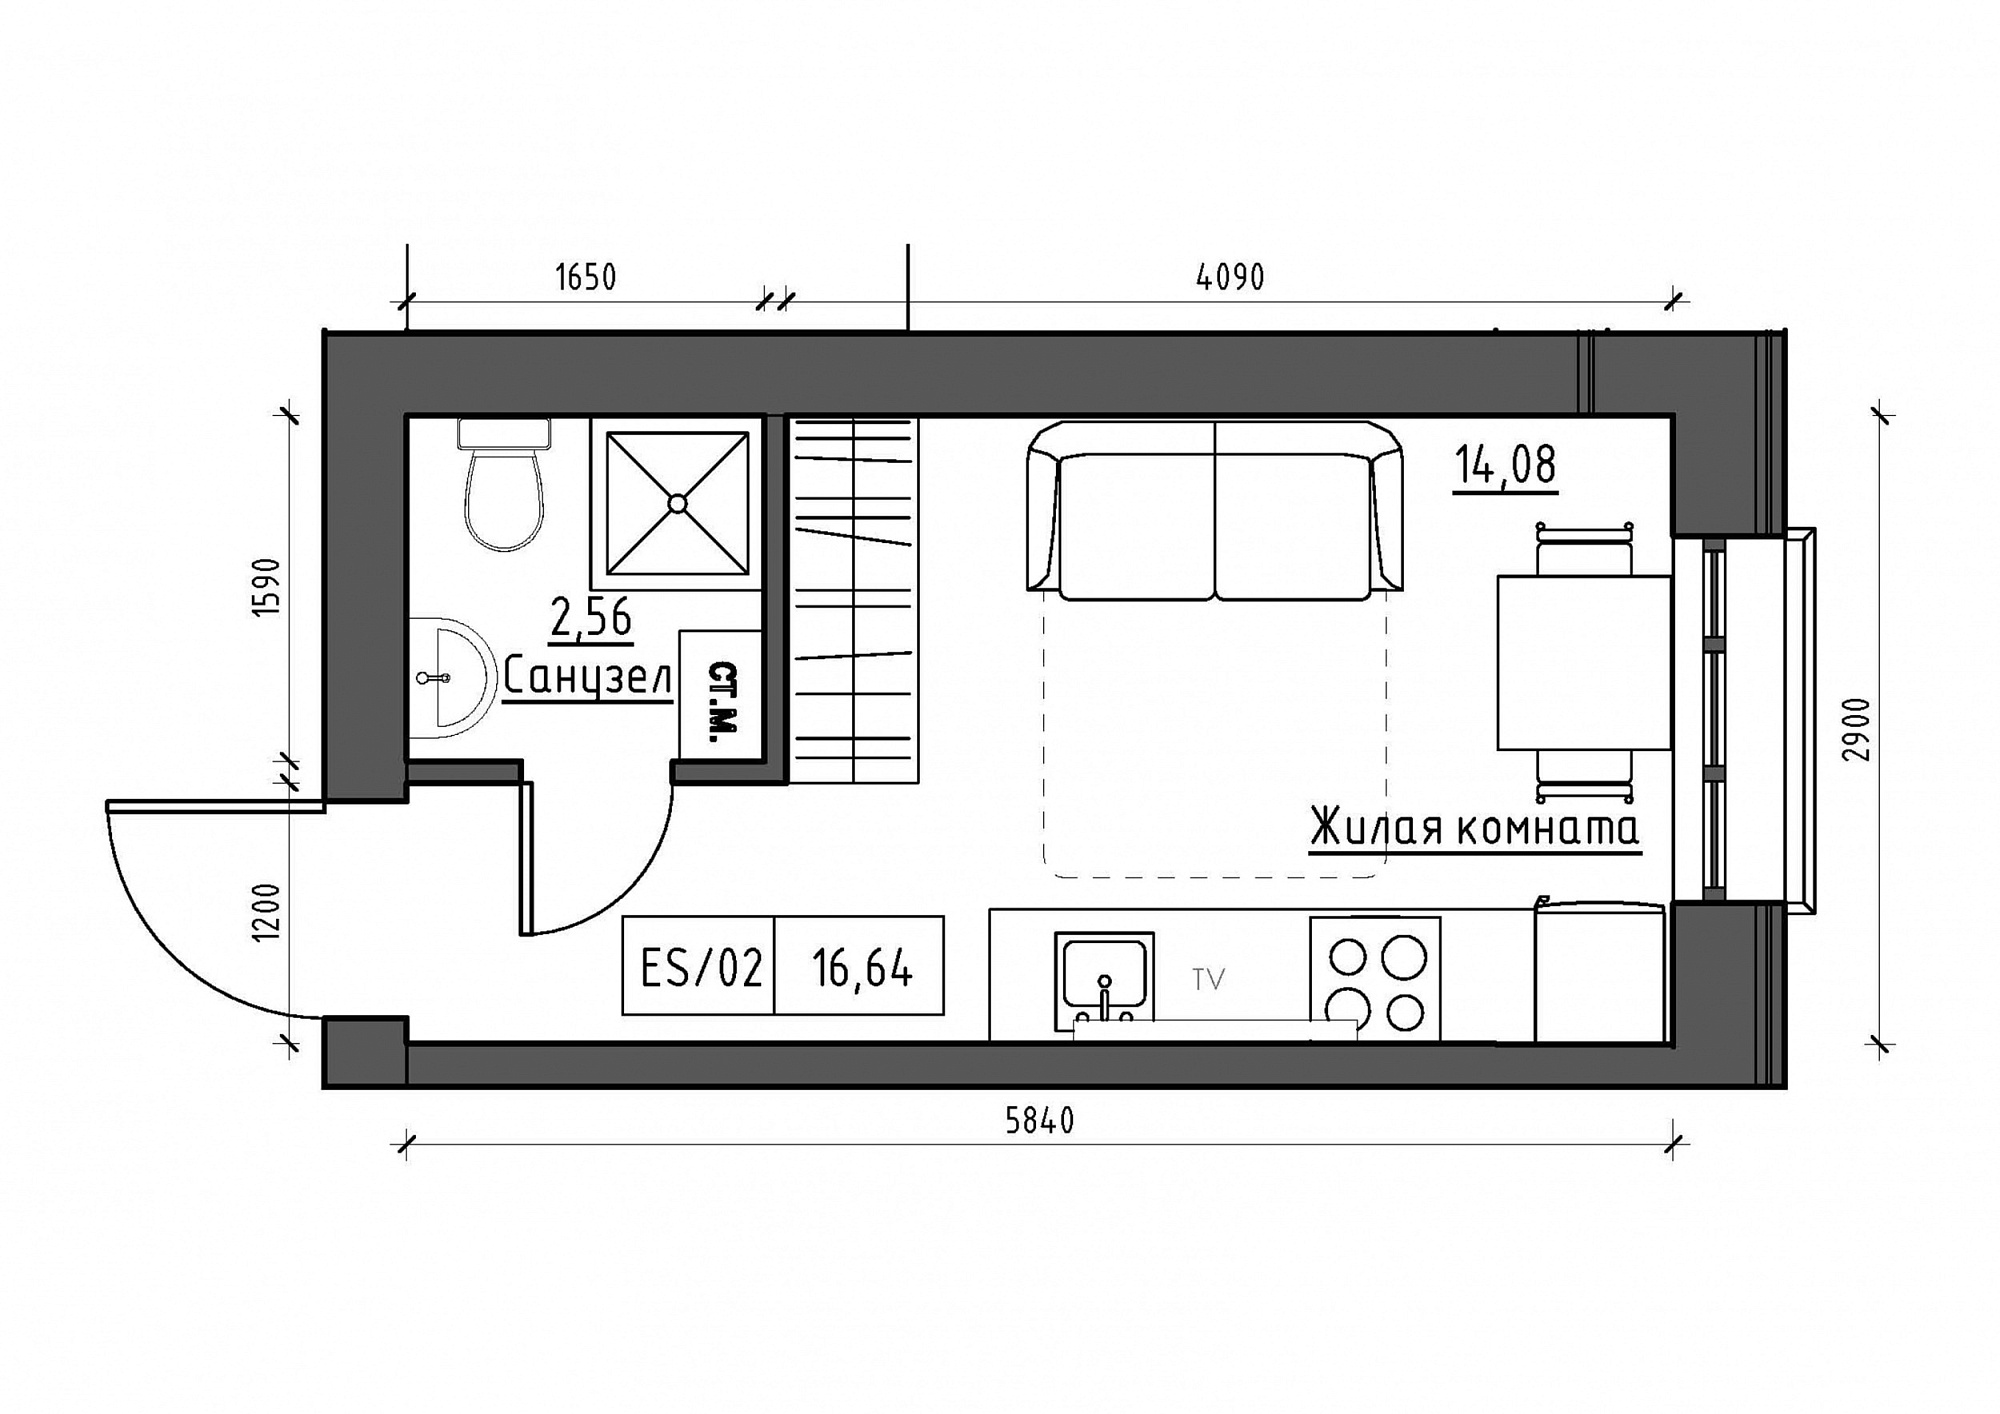 Planning Smart flats area 16.64m2, KS-011-05/0005.